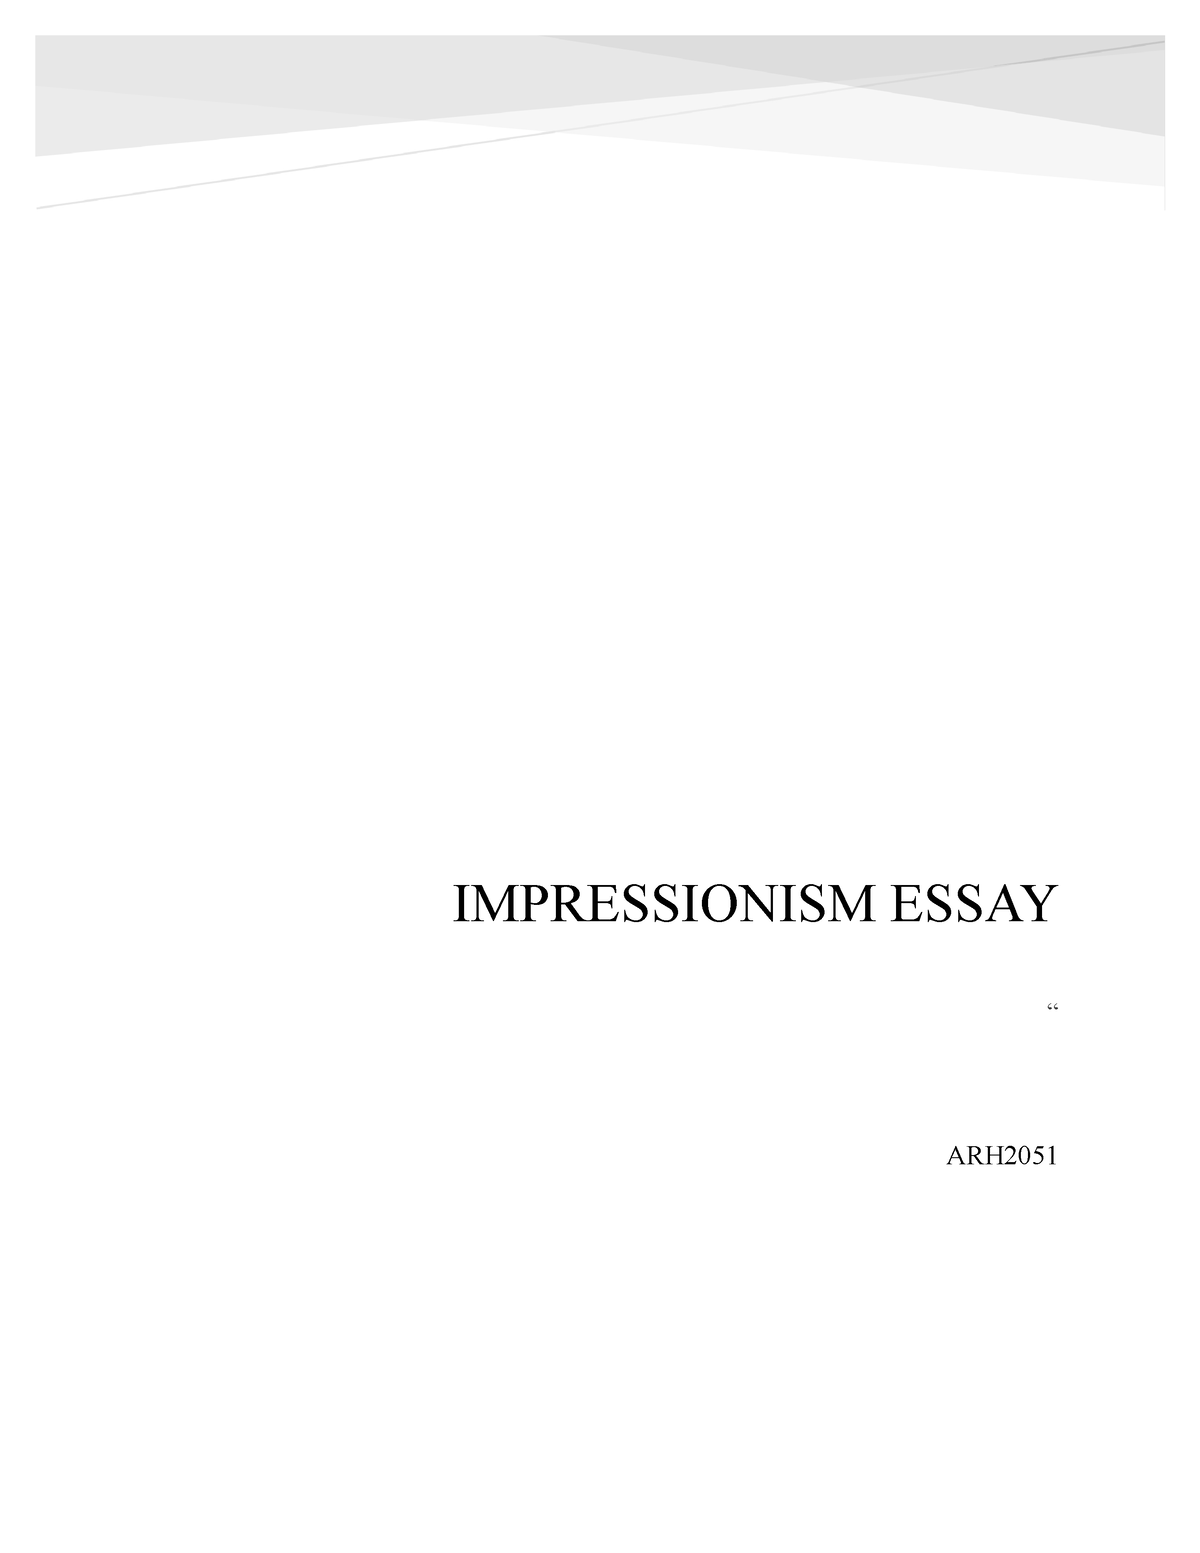 essay topics about impressionism